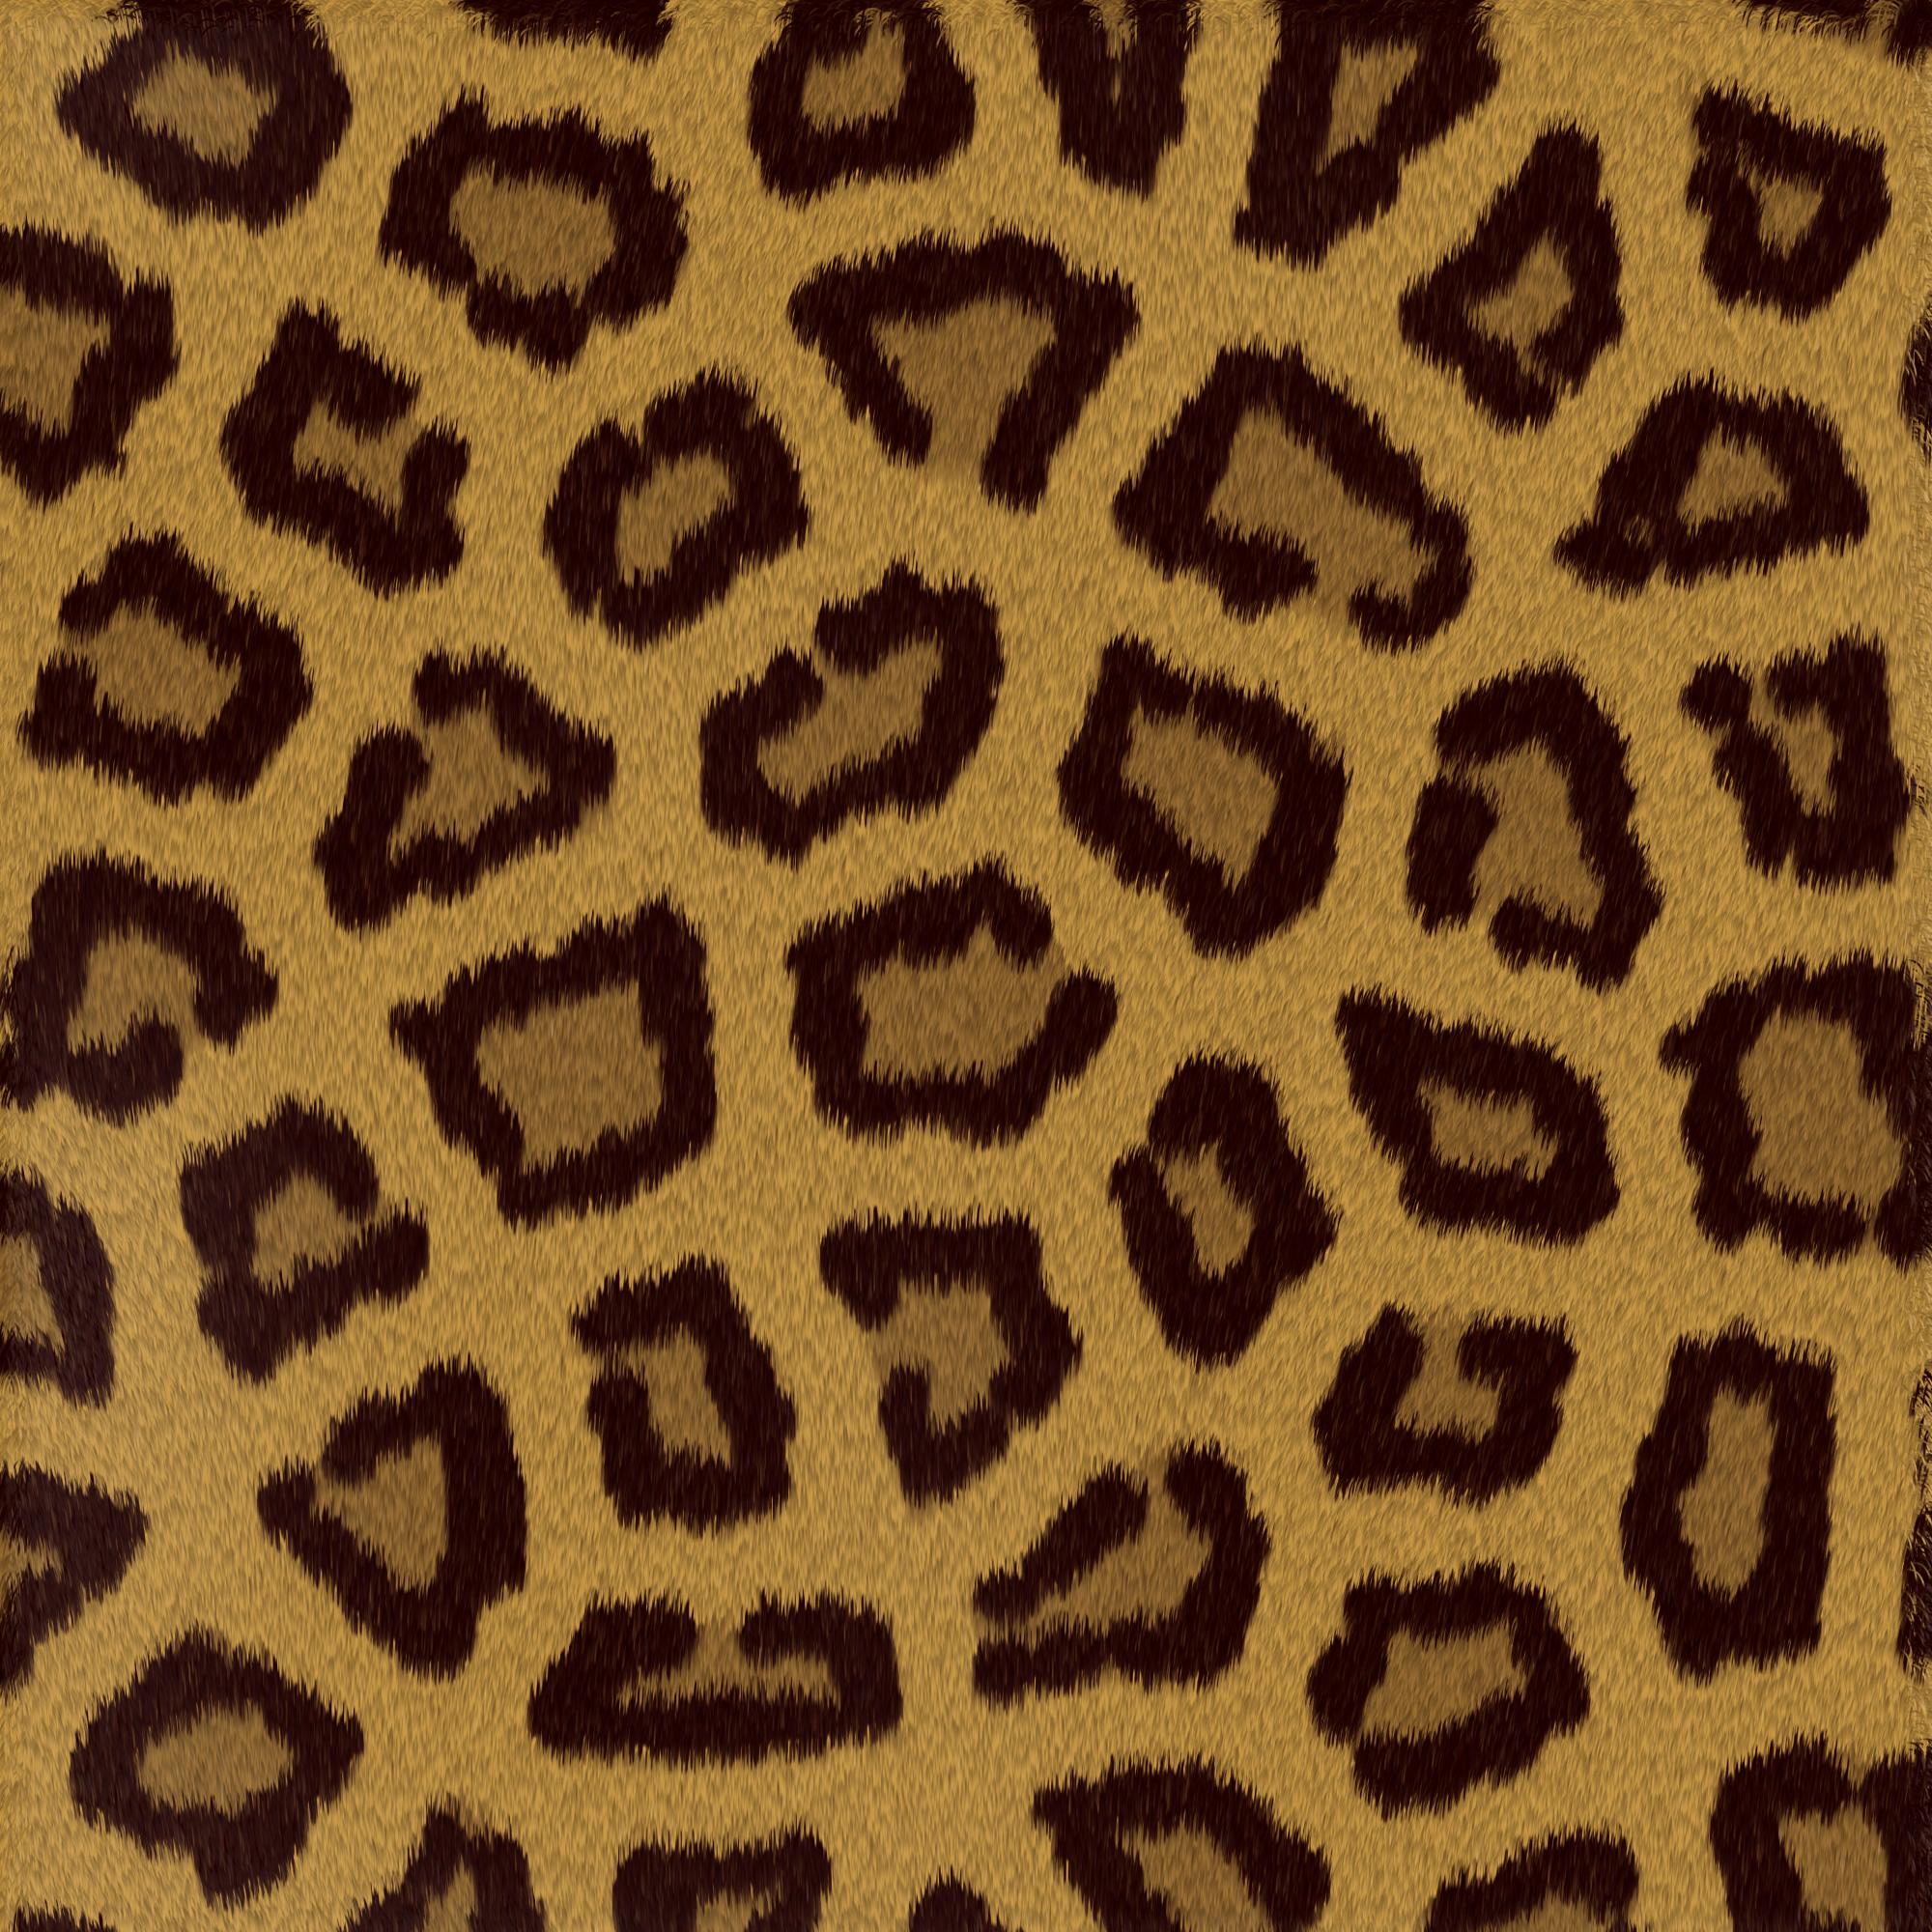 giraffe, skin giraffe, animal texture, background, skin animal texture, background